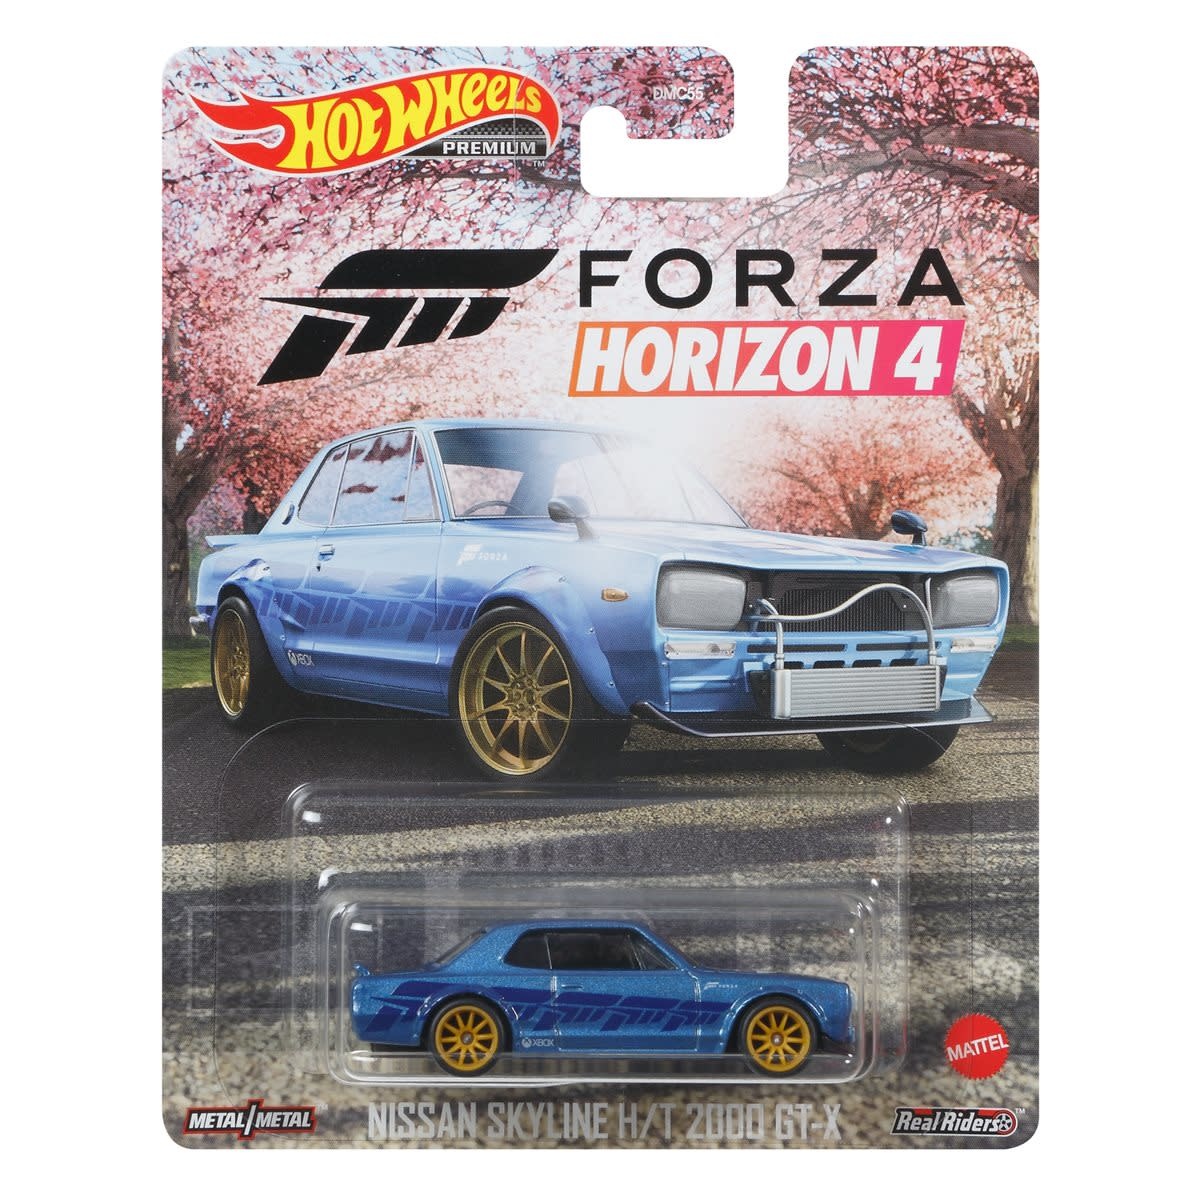 Toy Hot Wheels Forza Horizon 4 Nissan Skyline H T 00 Gt X Chez Rhox Geek Stop